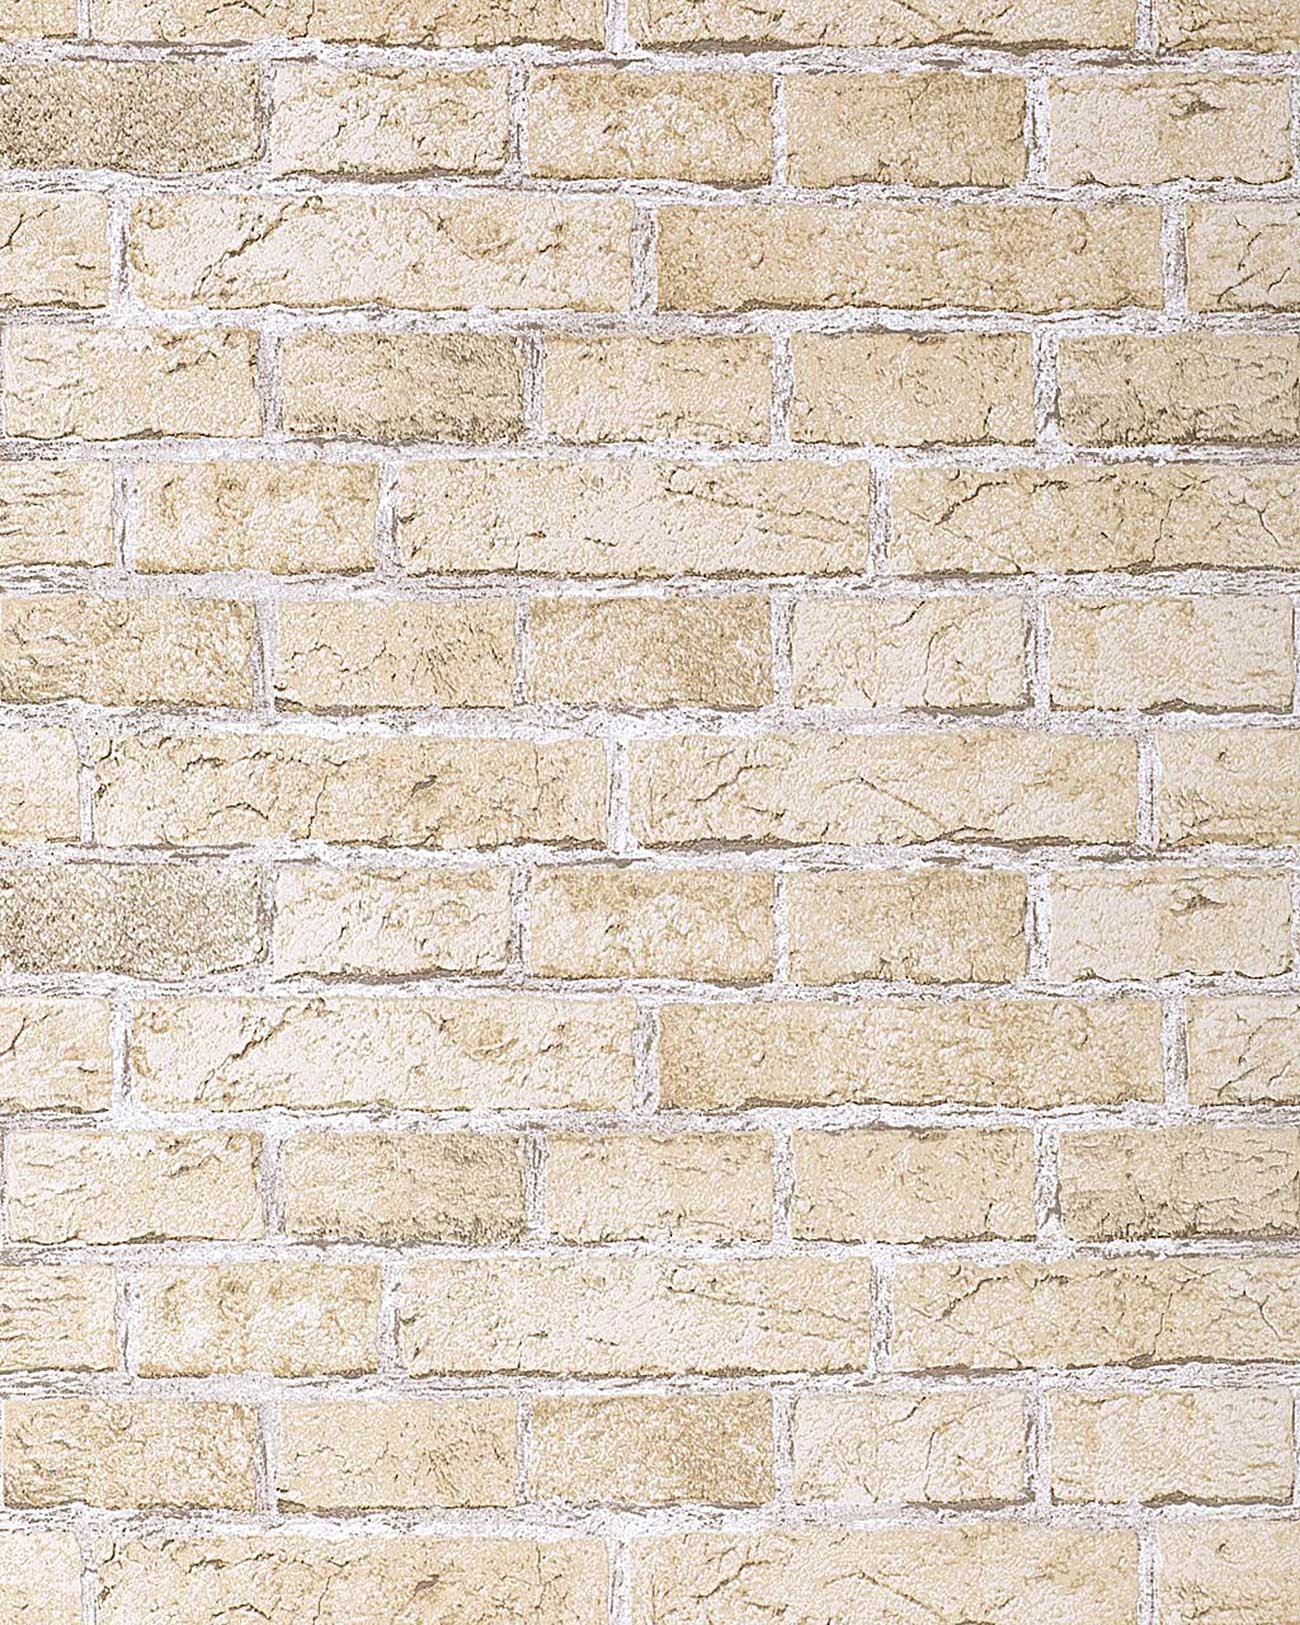   20 Rustic design brick wallpaper decor vintage stone look sand beige